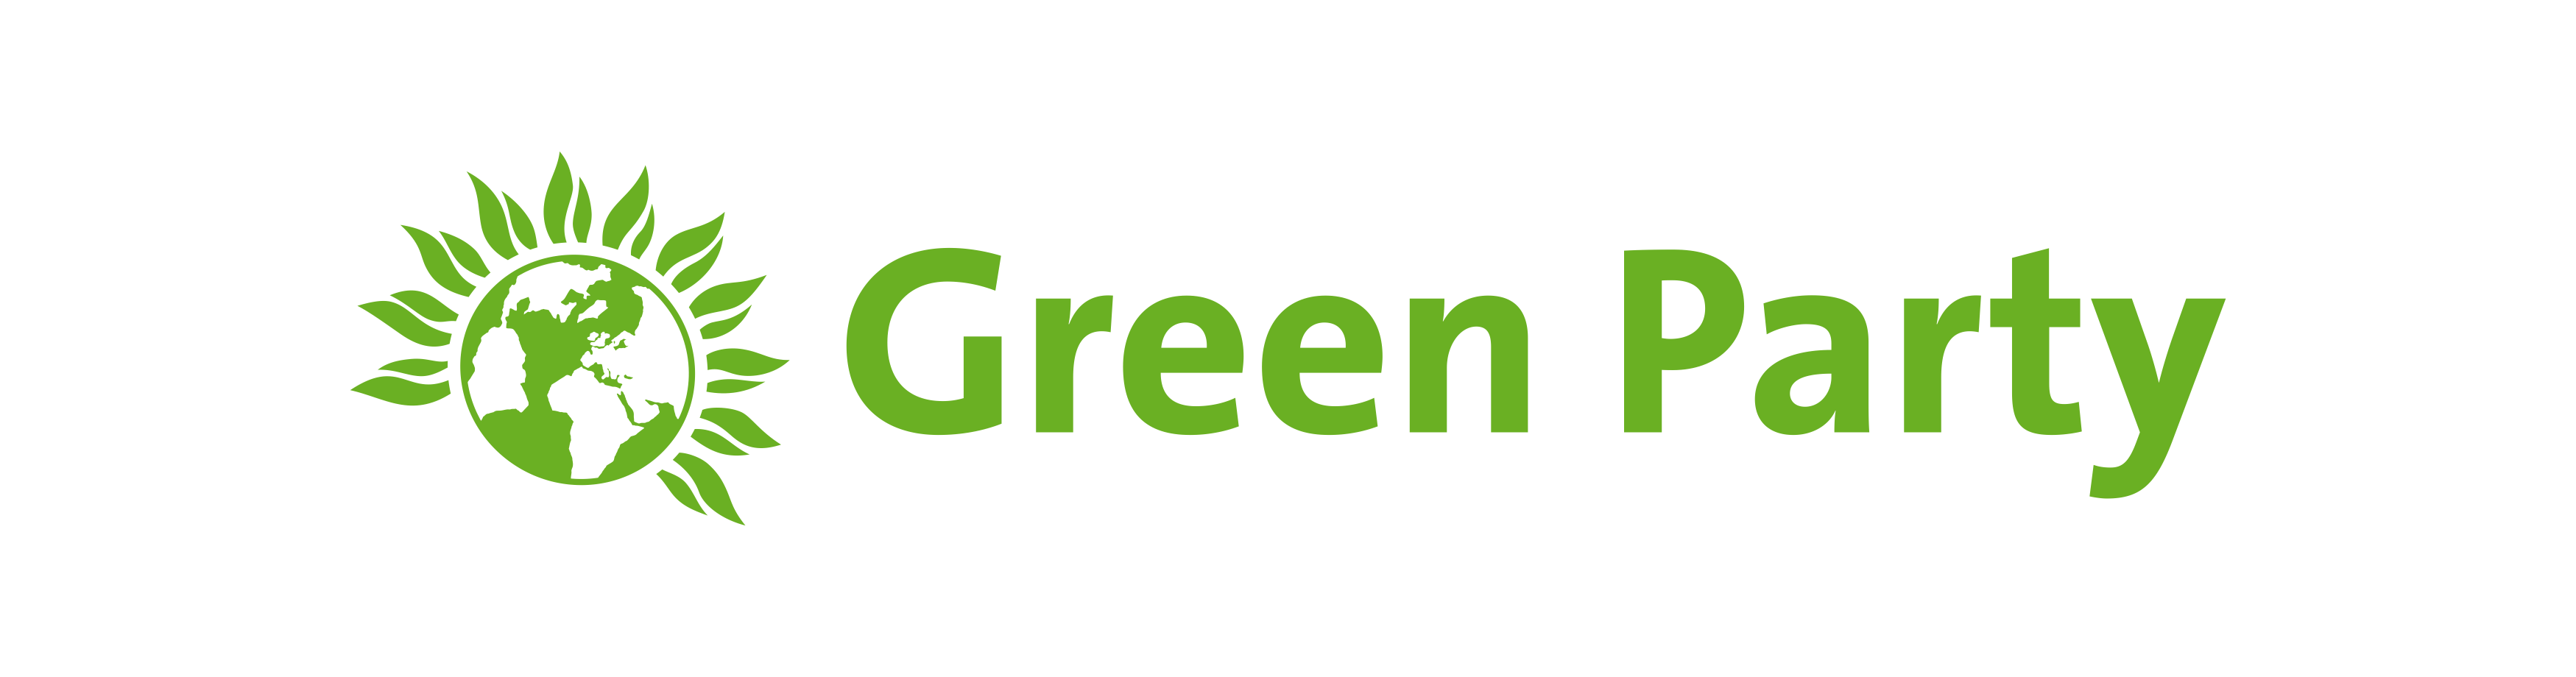 Party Logo - Green Party Visual Identity